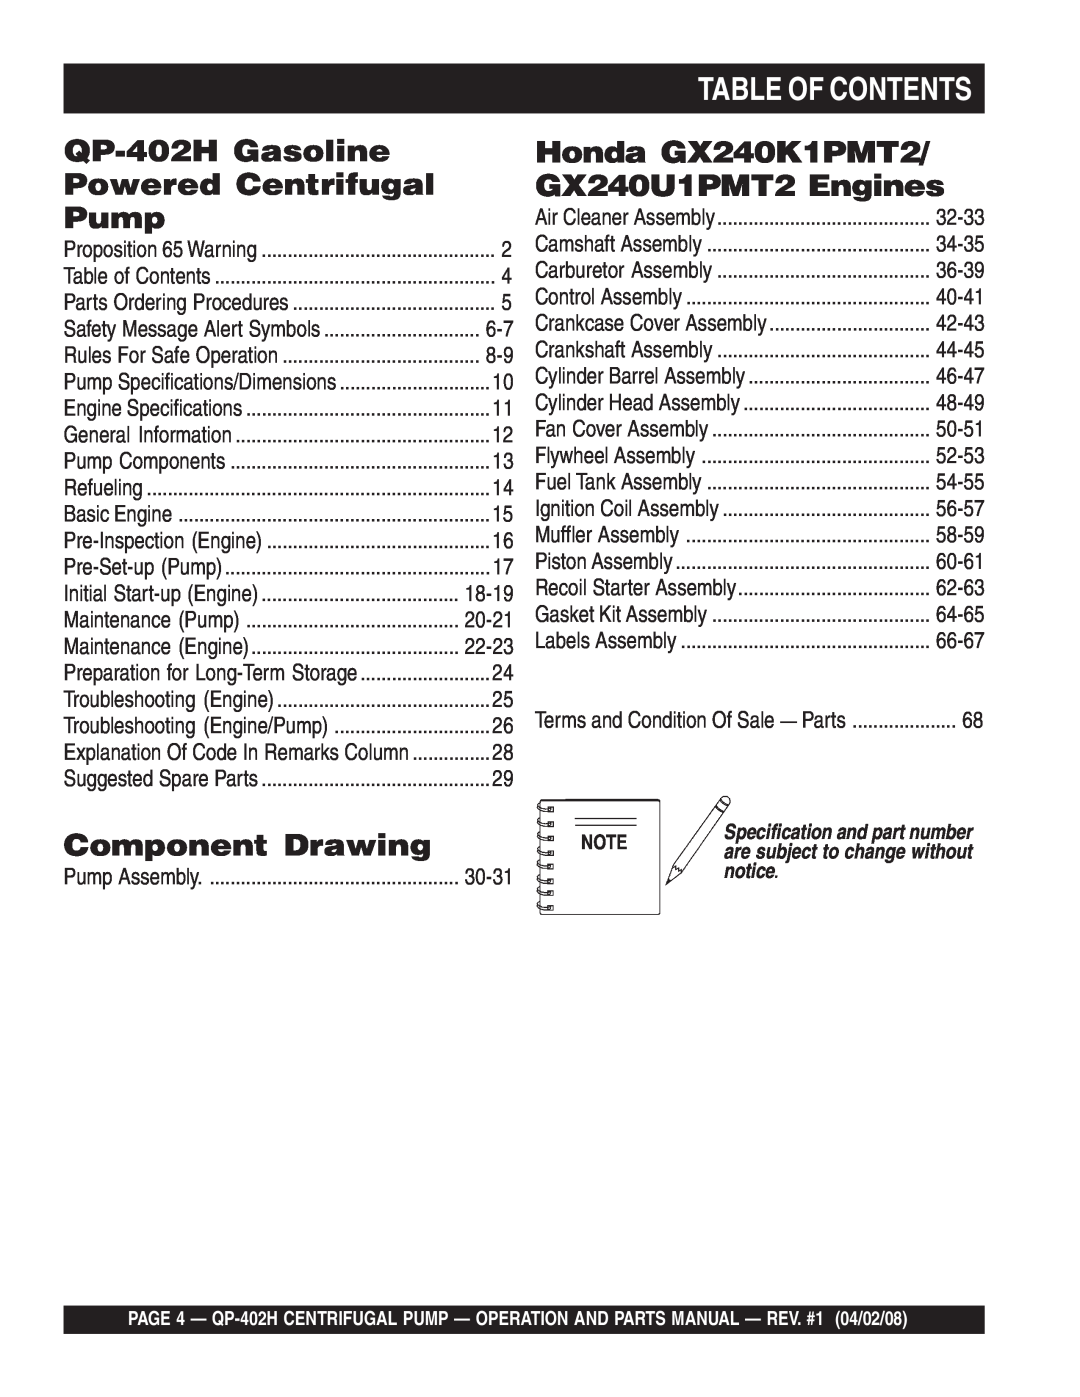 Multiquip qp-402h Table Of Contents, QP-402HGasoline, Powered Centrifugal, Pump, Honda GX240K1PMT2/ GX240U1PMT2 Engines 